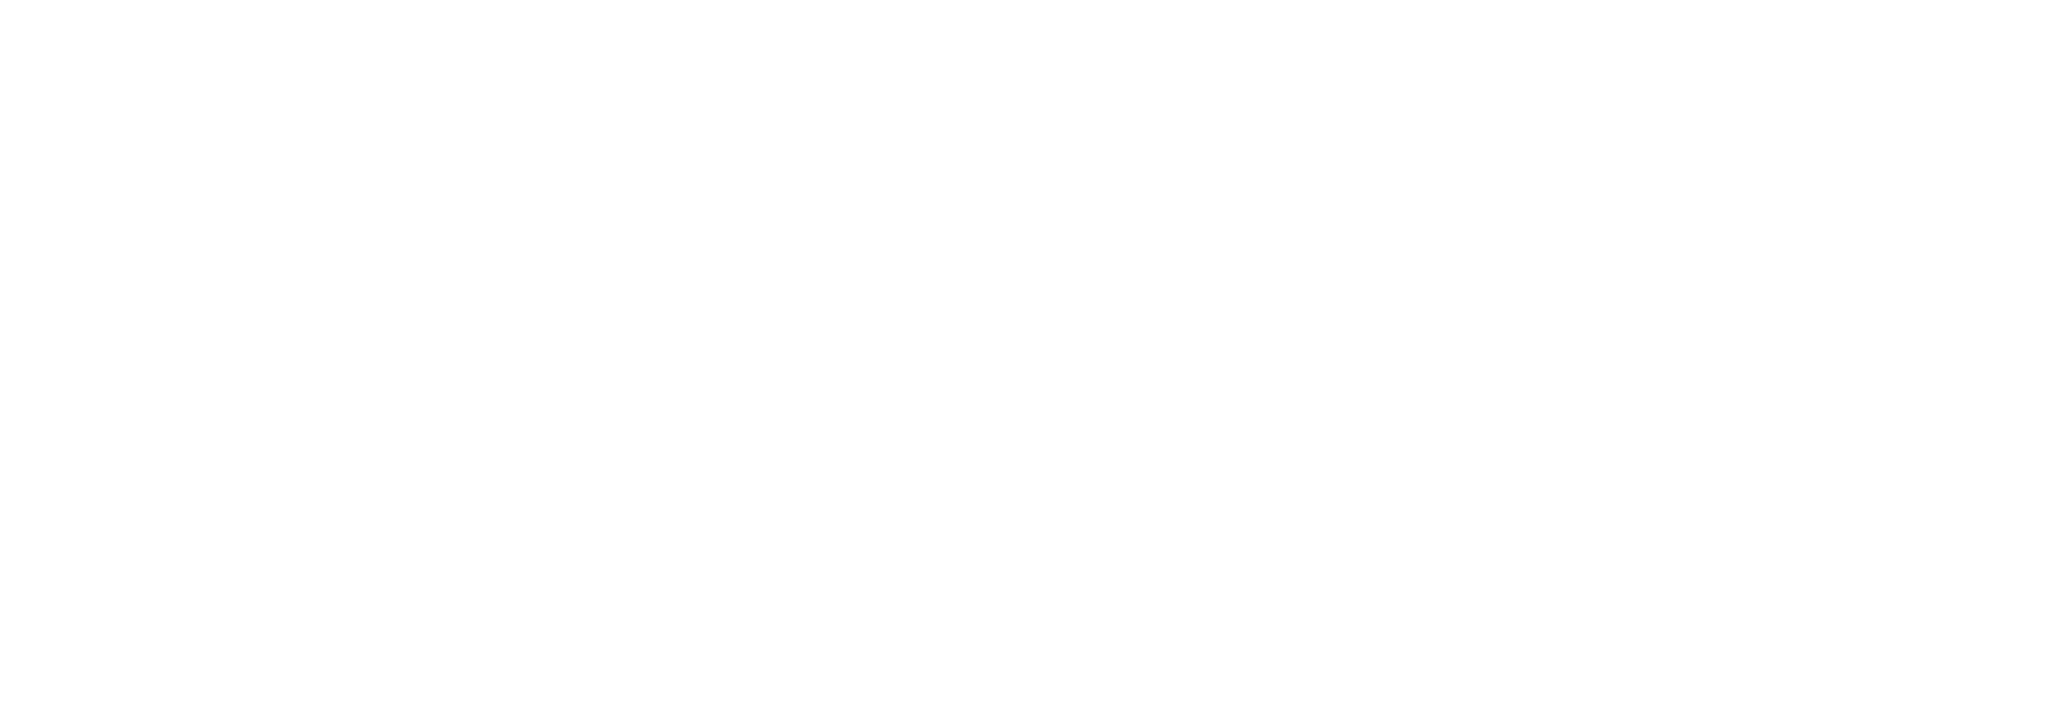 Congo Initiative logo